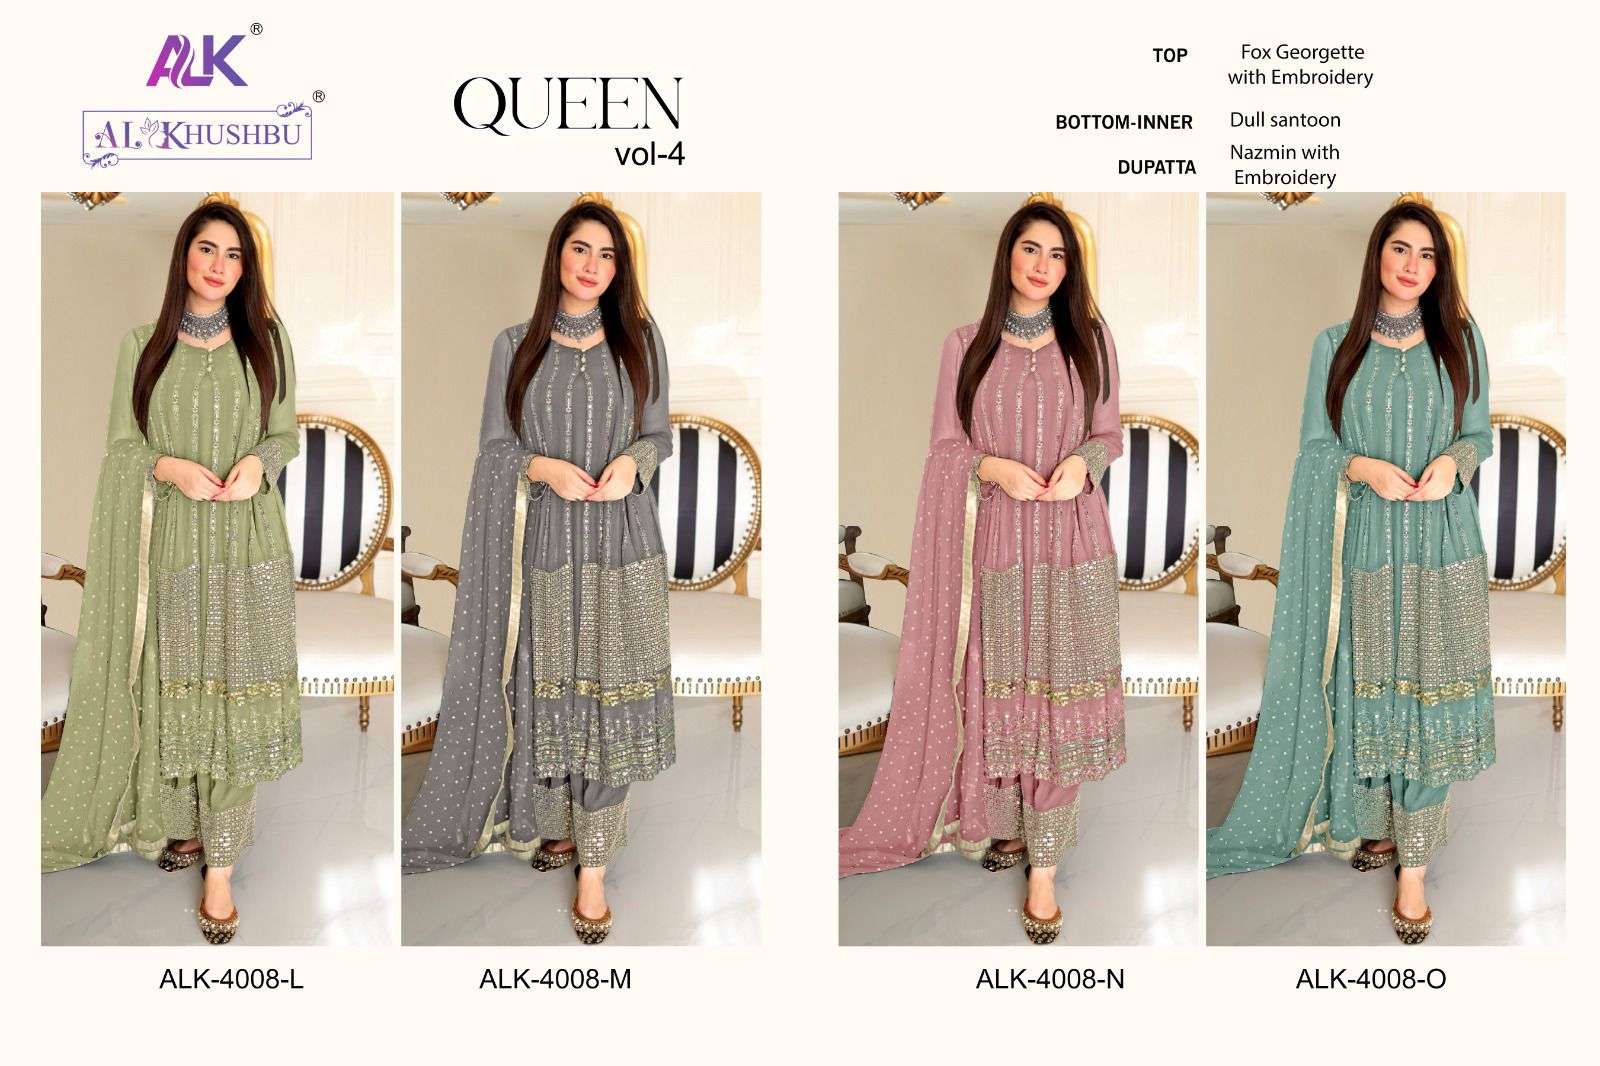 Alk Khushbu Queen Vol 4 Designer Pakistani Suit Wholesale catalog